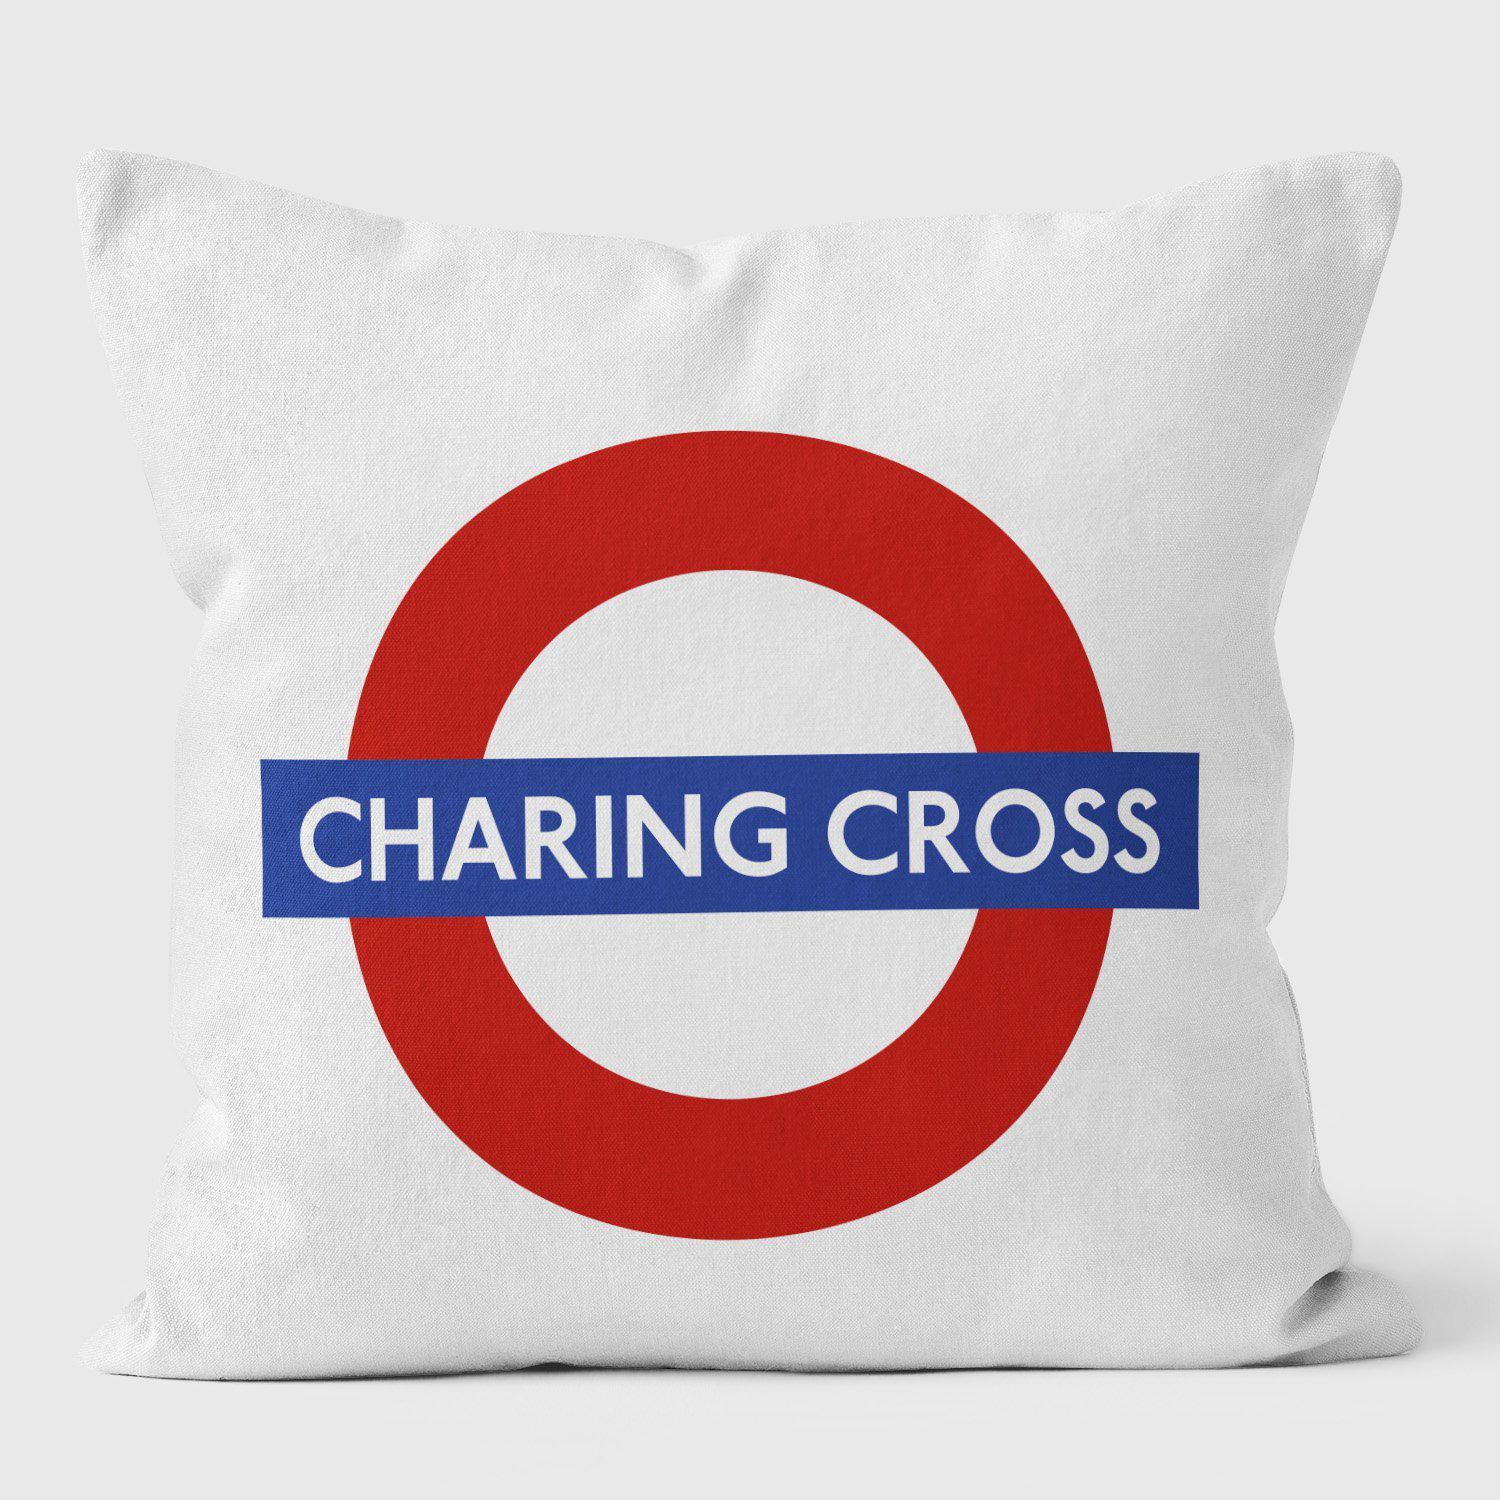 Charring Cross London Underground Tube Station Roundel Cushion - Handmade Cushions UK - WeLoveCushions